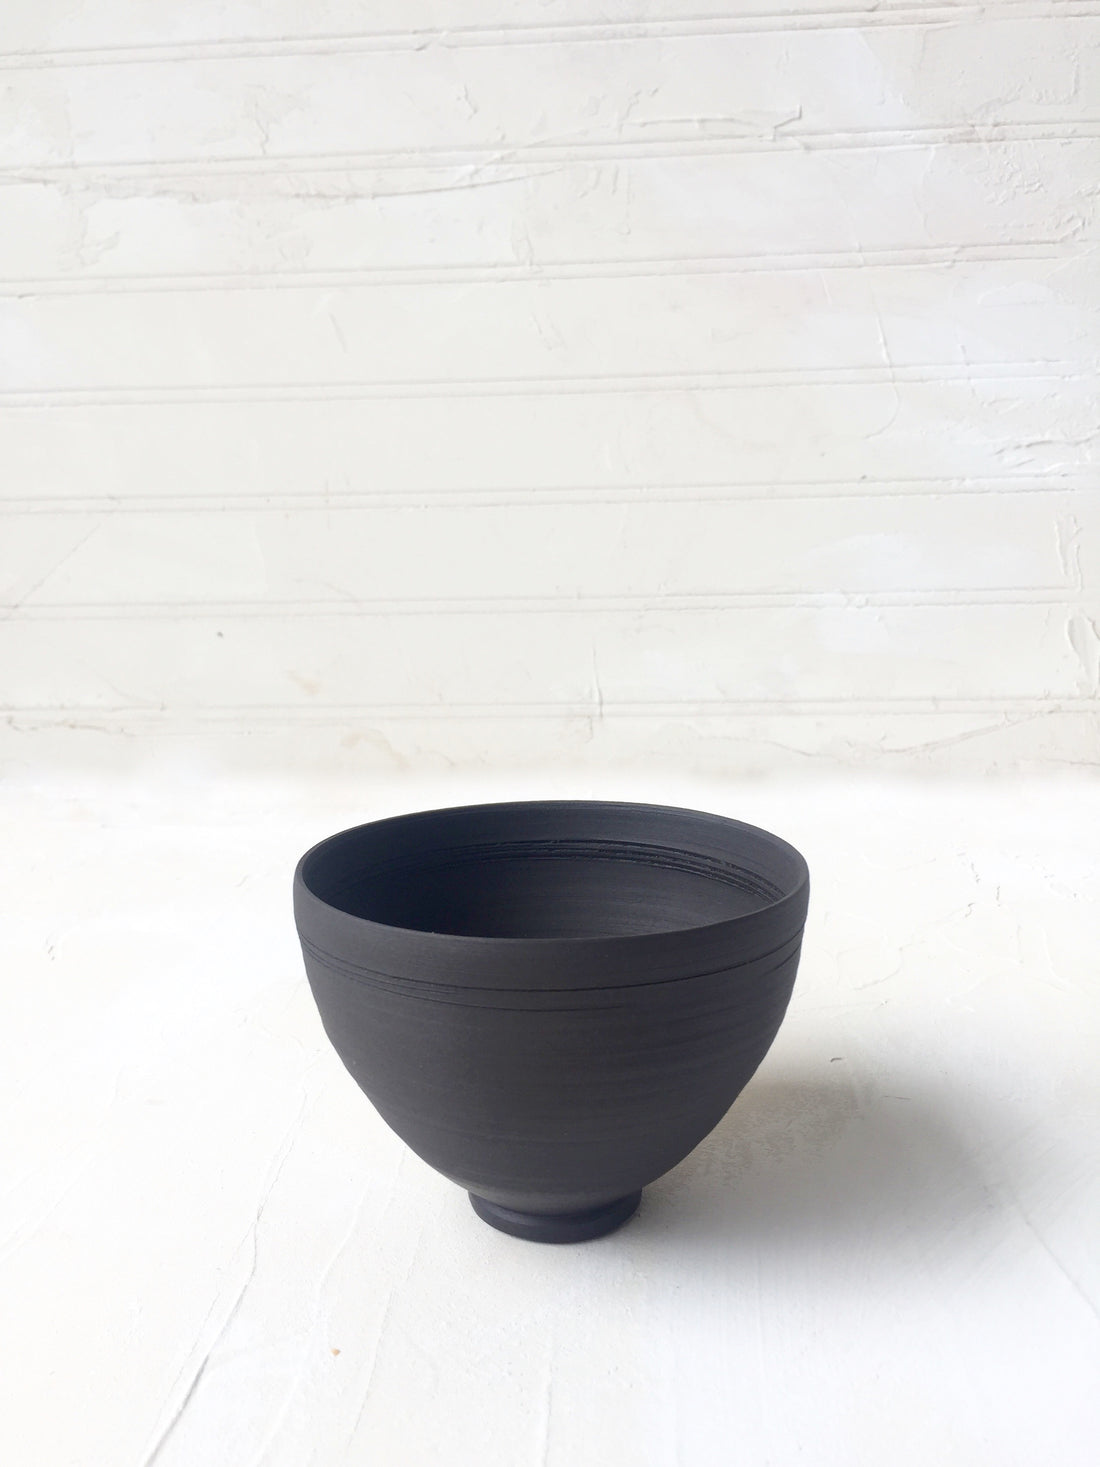 Tea Bowl / Ramekin in Black